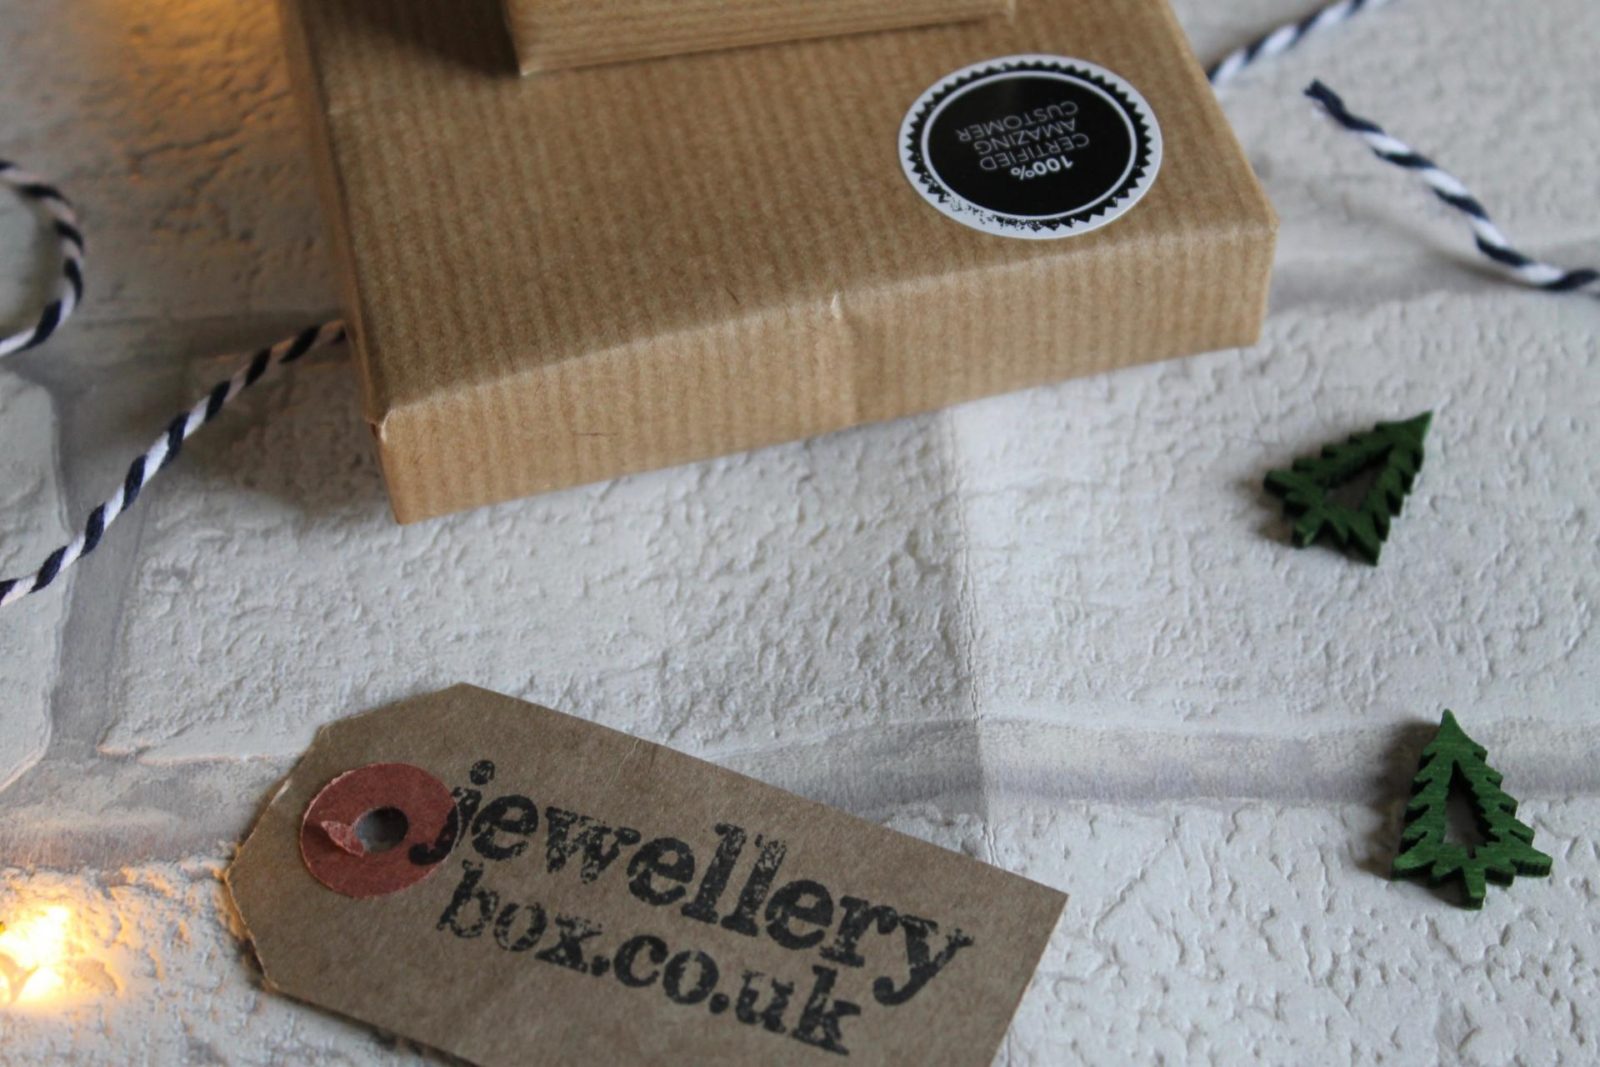 jewllerybox-co-uk-review-10